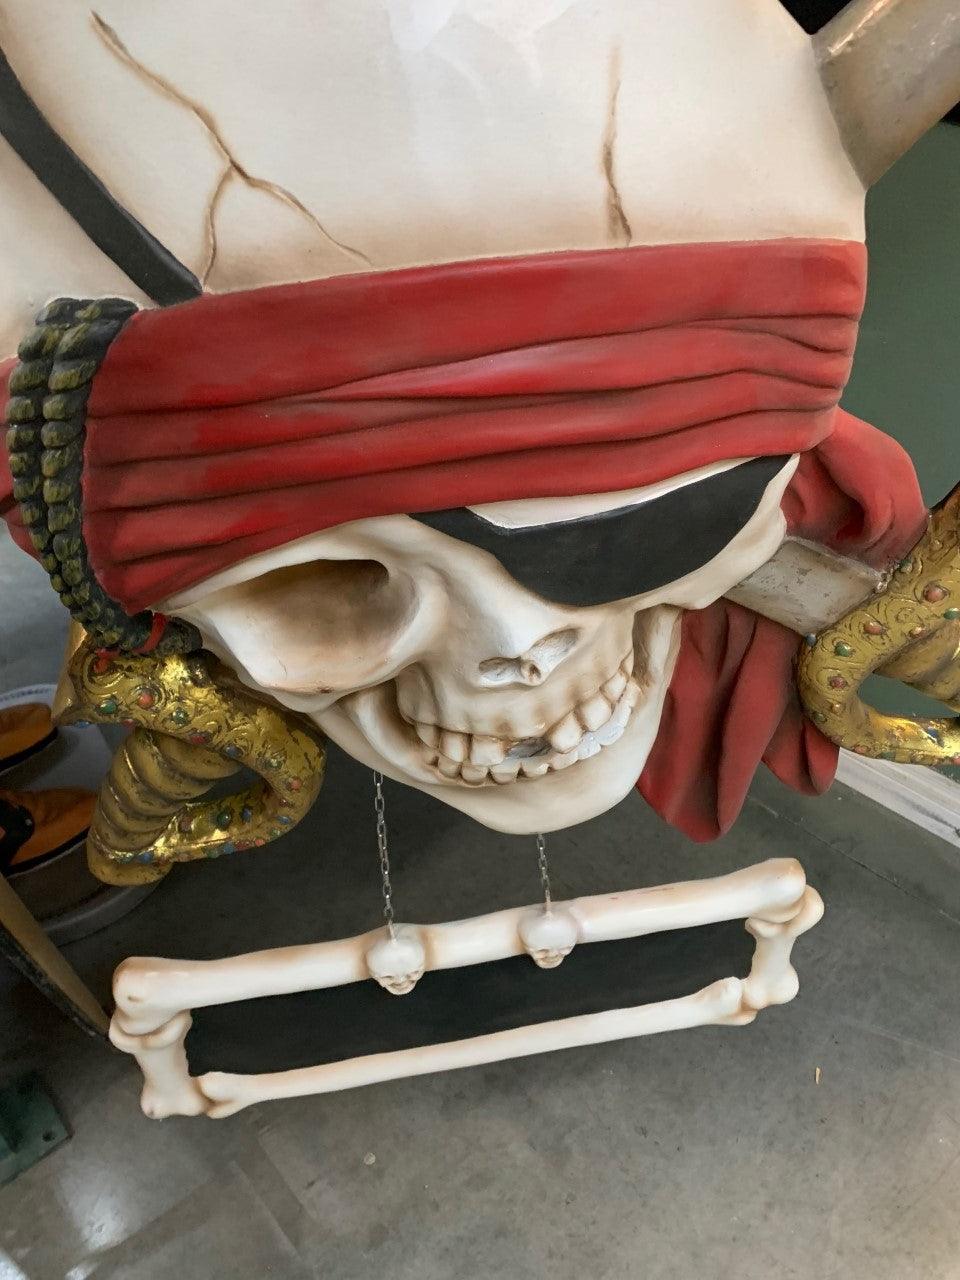 Pirate Skull Sword Sign Statue